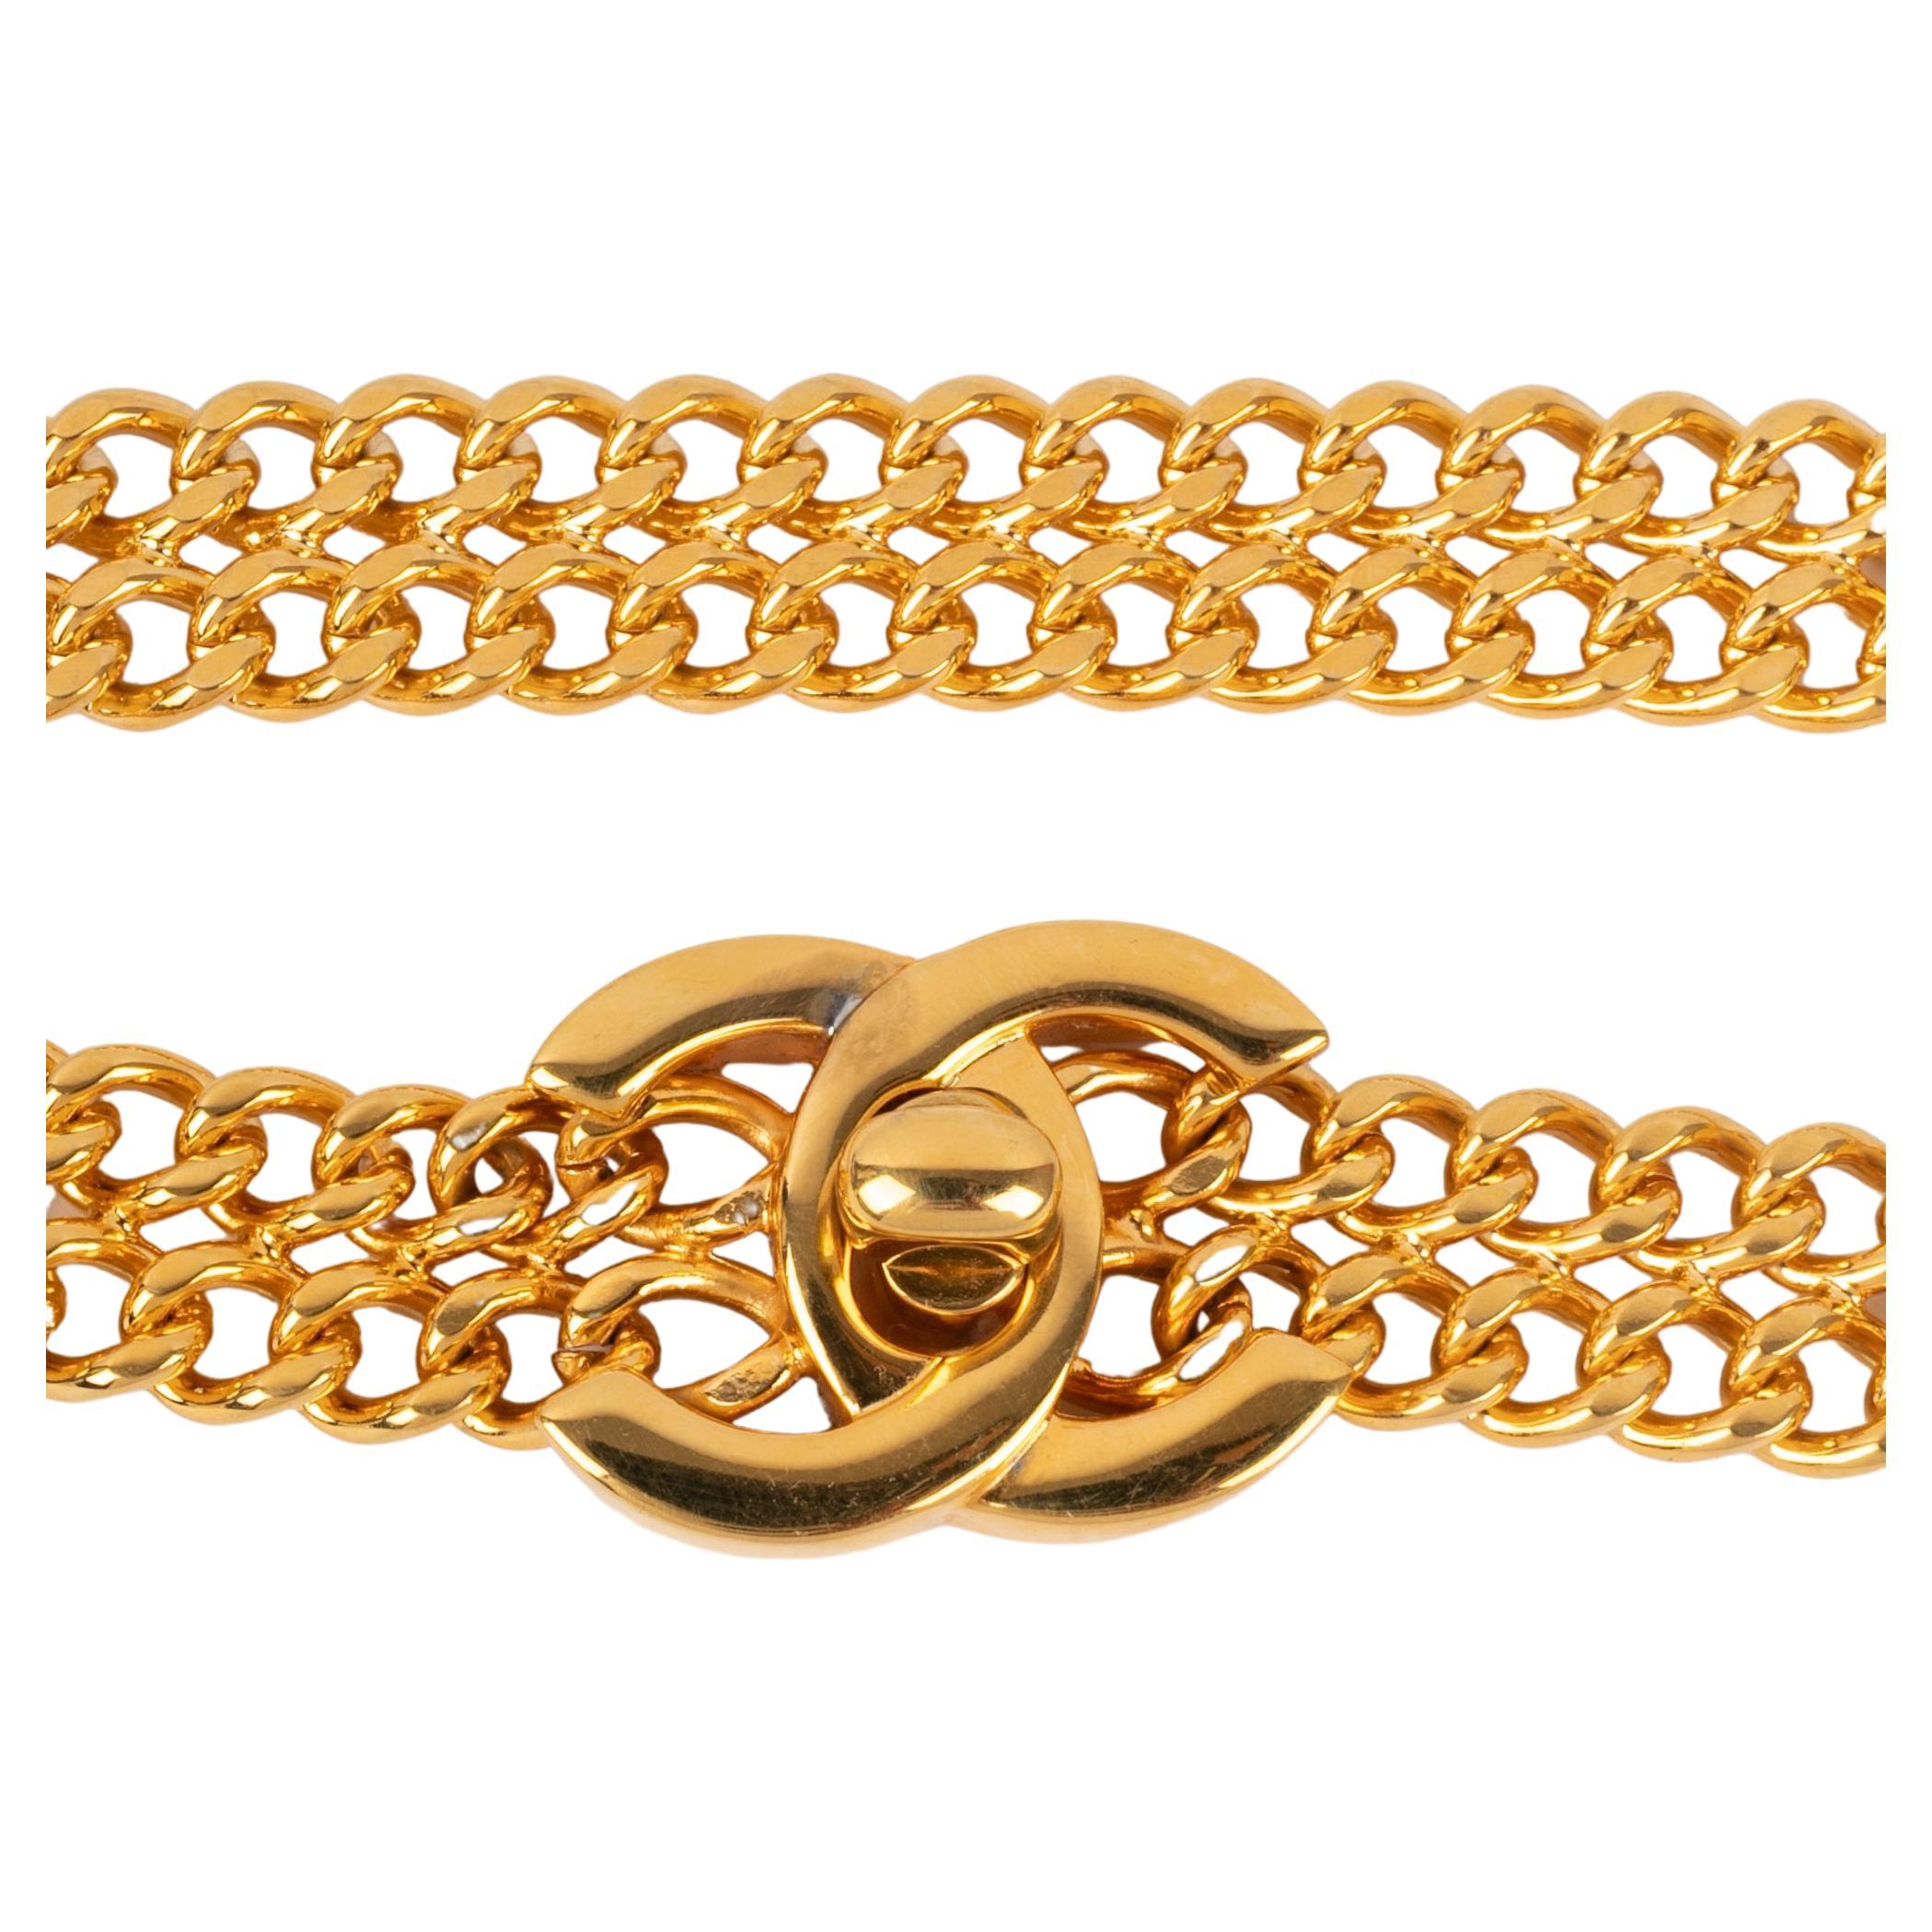 Vintage Chanel Goldtone Turnlock Necklace – Very Vintage